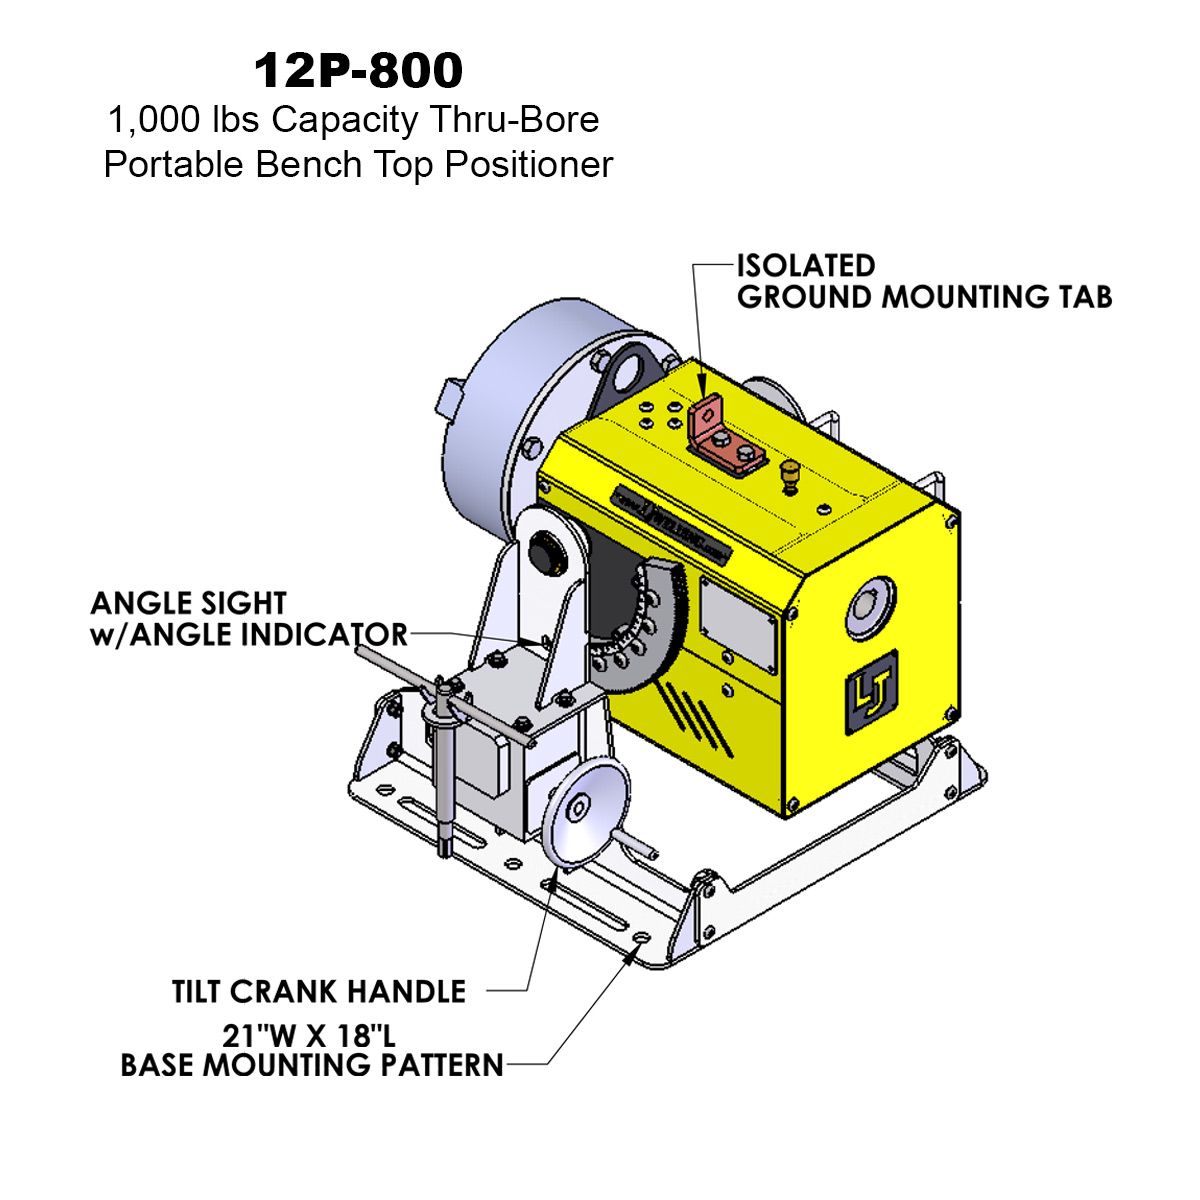 03-1000lbs-Thru-Bore-Portable-Bench-Top-Positioner